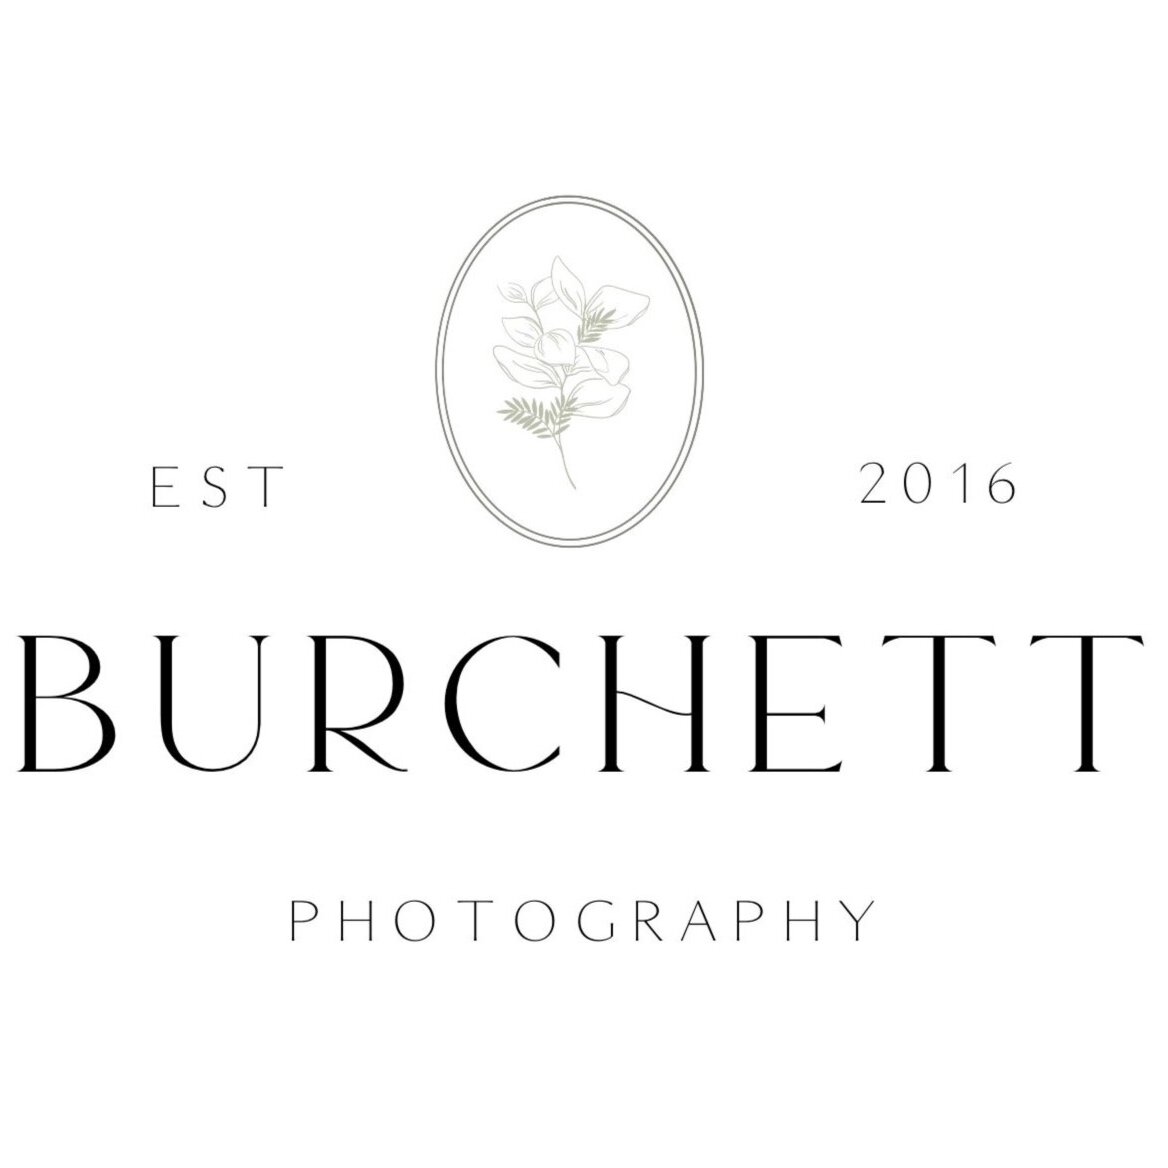 Burchett Photography